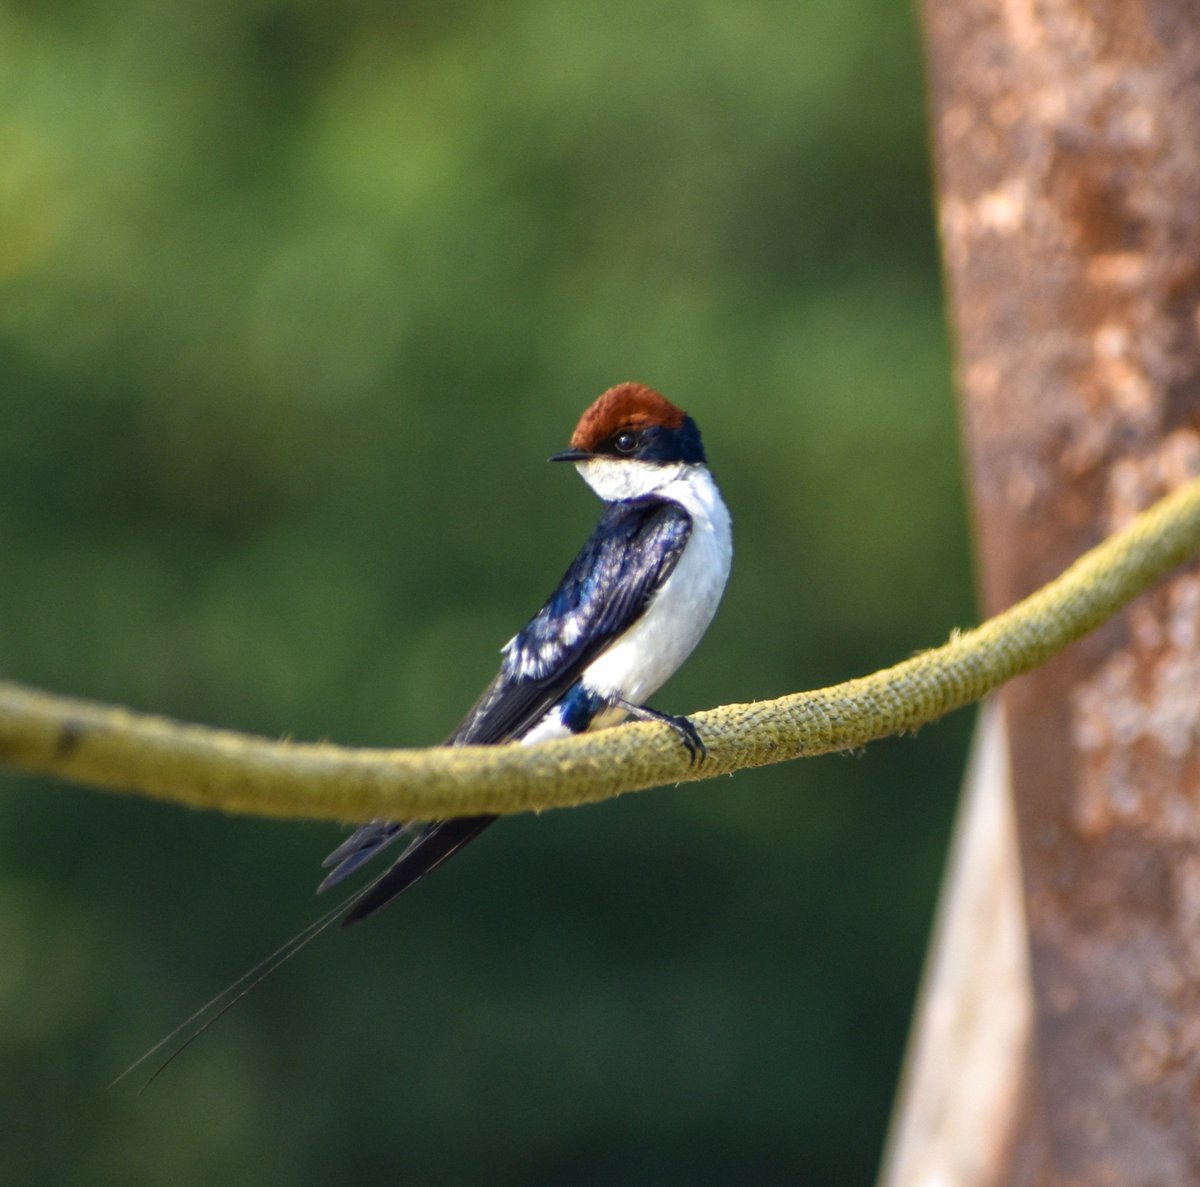 𝓦𝓲𝓻𝓮-𝓣𝓪𝓲𝓵𝓮𝓭 𝓢𝔀𝓪𝓵𝓵𝓸𝔀, 𝓖𝓸𝓪
#IndiAves #BirdsOfTwitter 
#birdwatching #ThePhotoHour #ThePhotoMode #BirdsofGoa